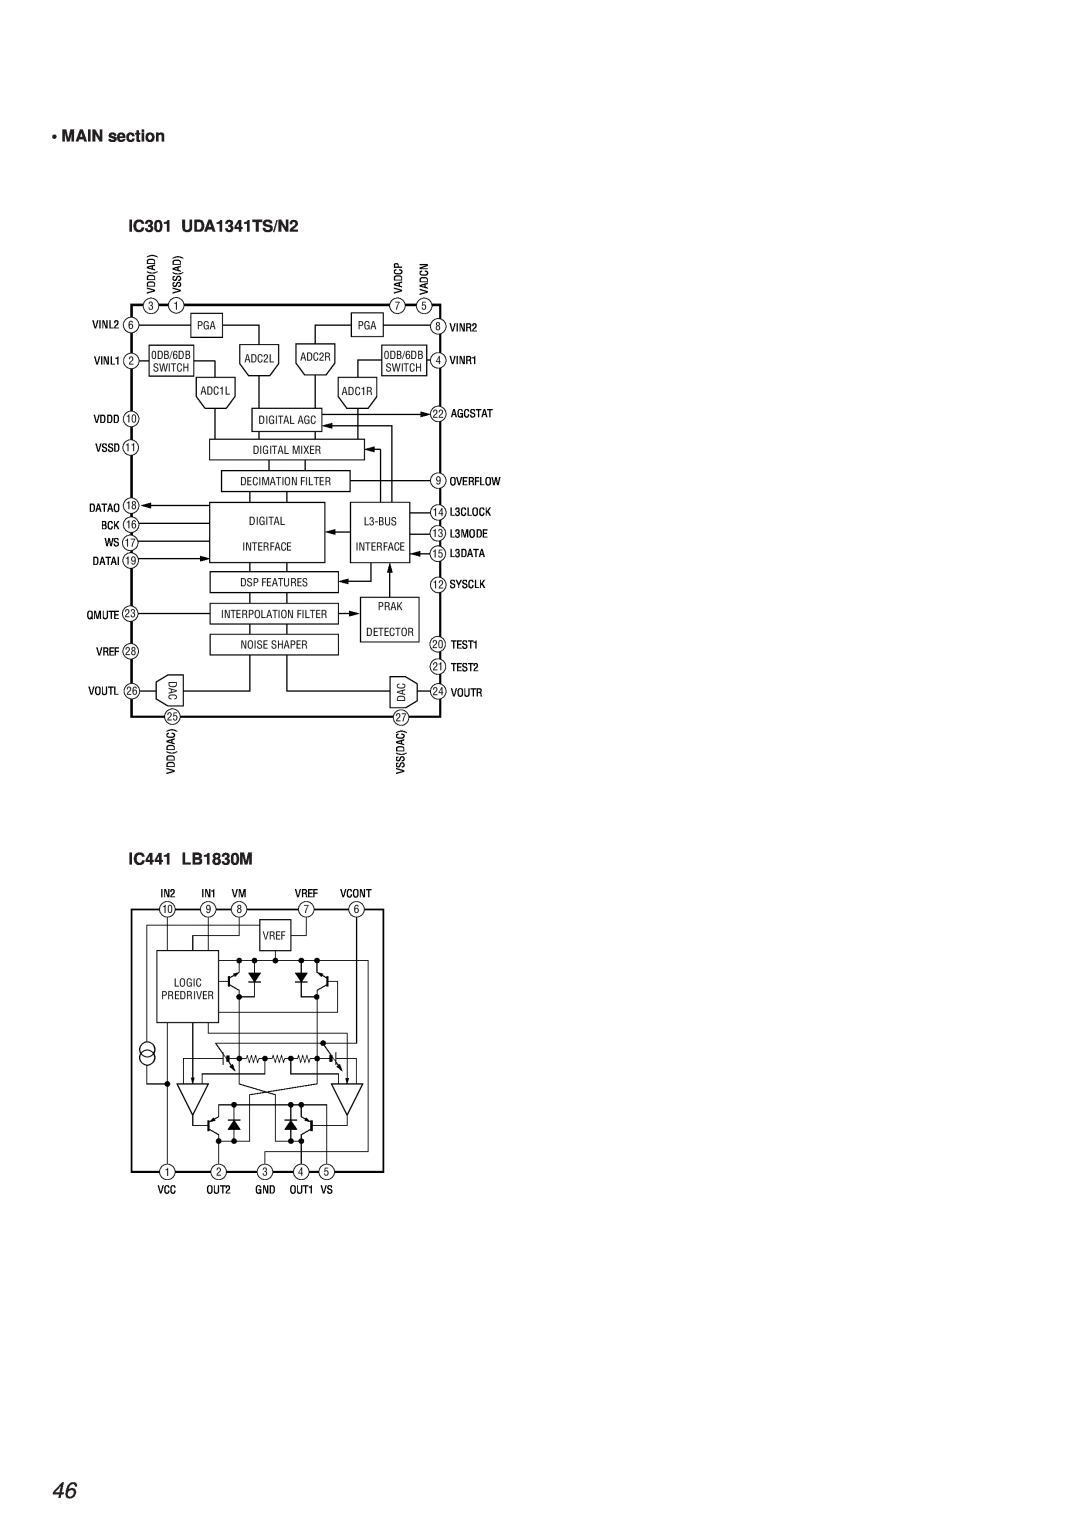 Sony MDS-PC2 service manual MAIN section, IC301 UDA1341TS/N2, IC441 LB1830M 